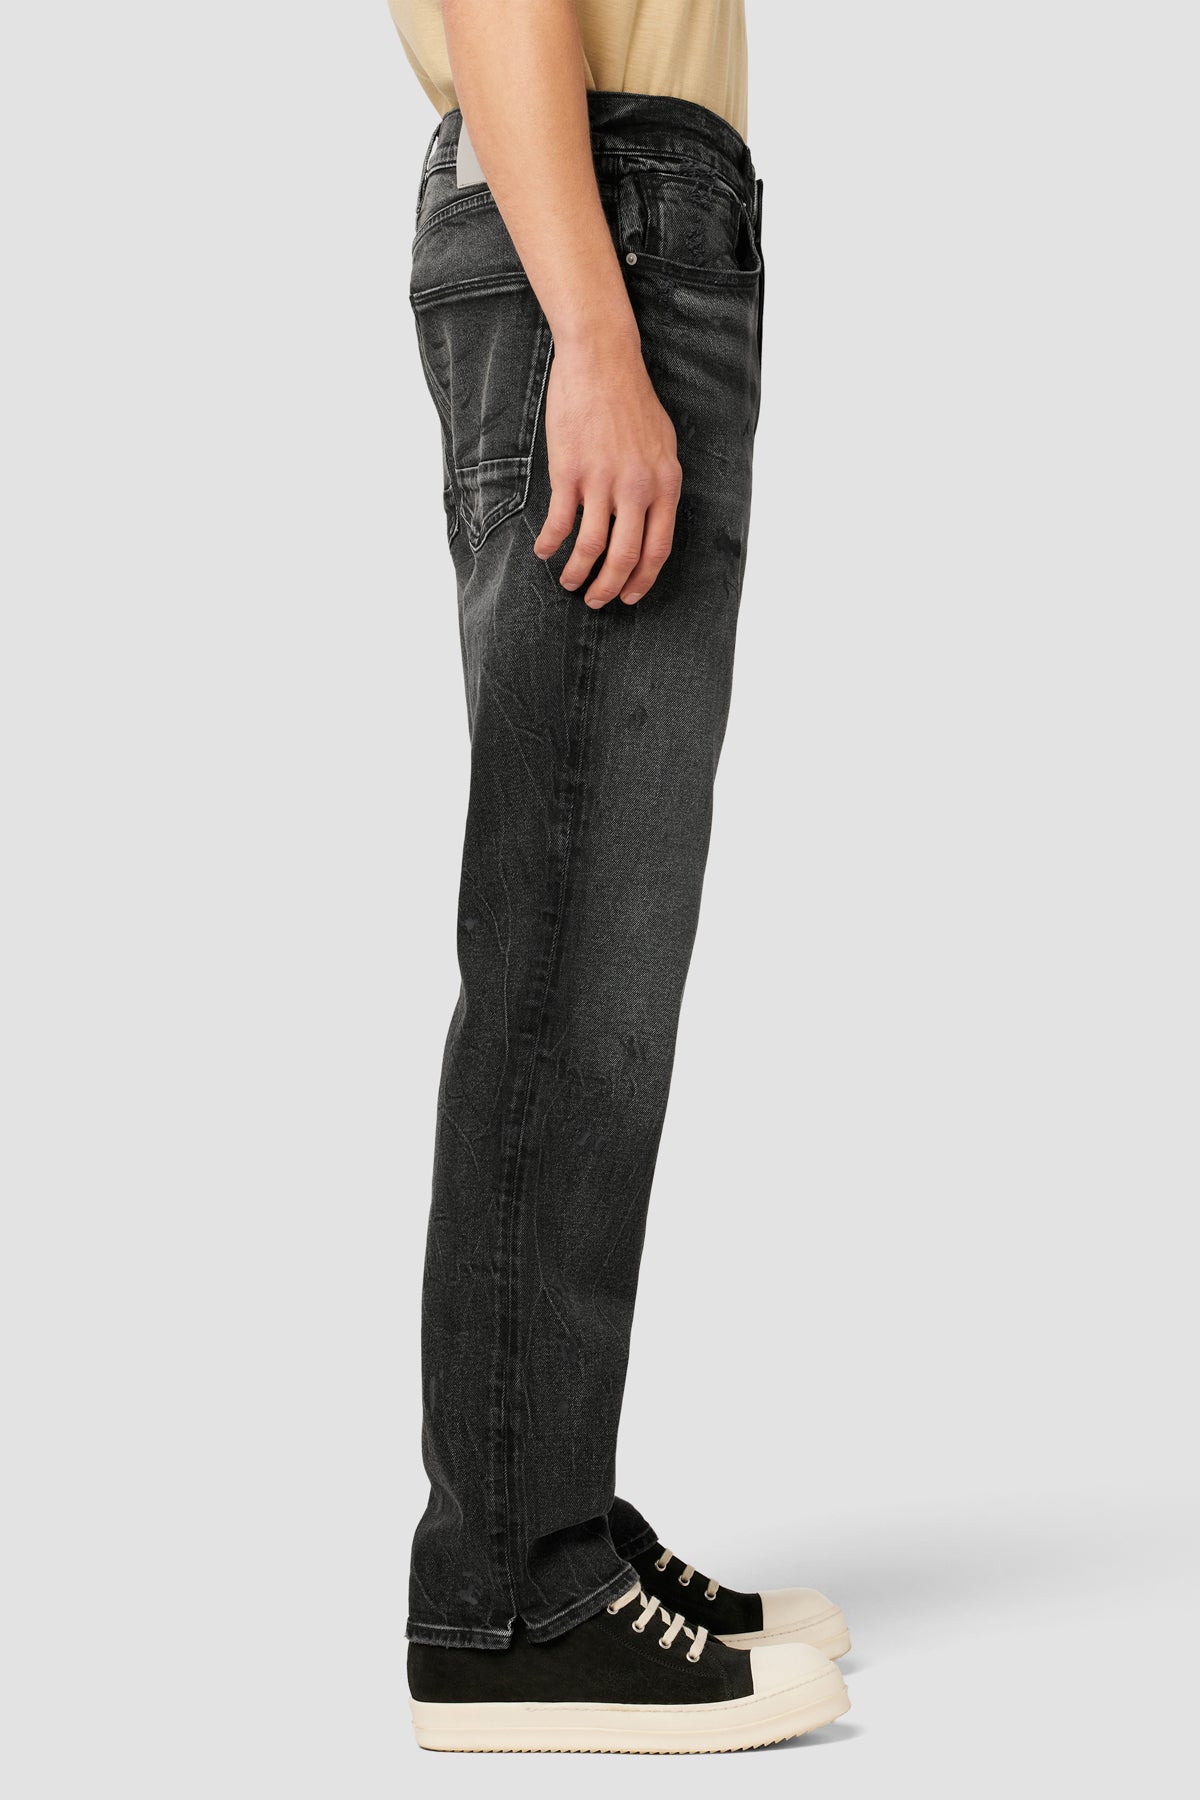 Hudson Men's Reese Distressed Carpenter Jeans - Distress Beige - Size 32